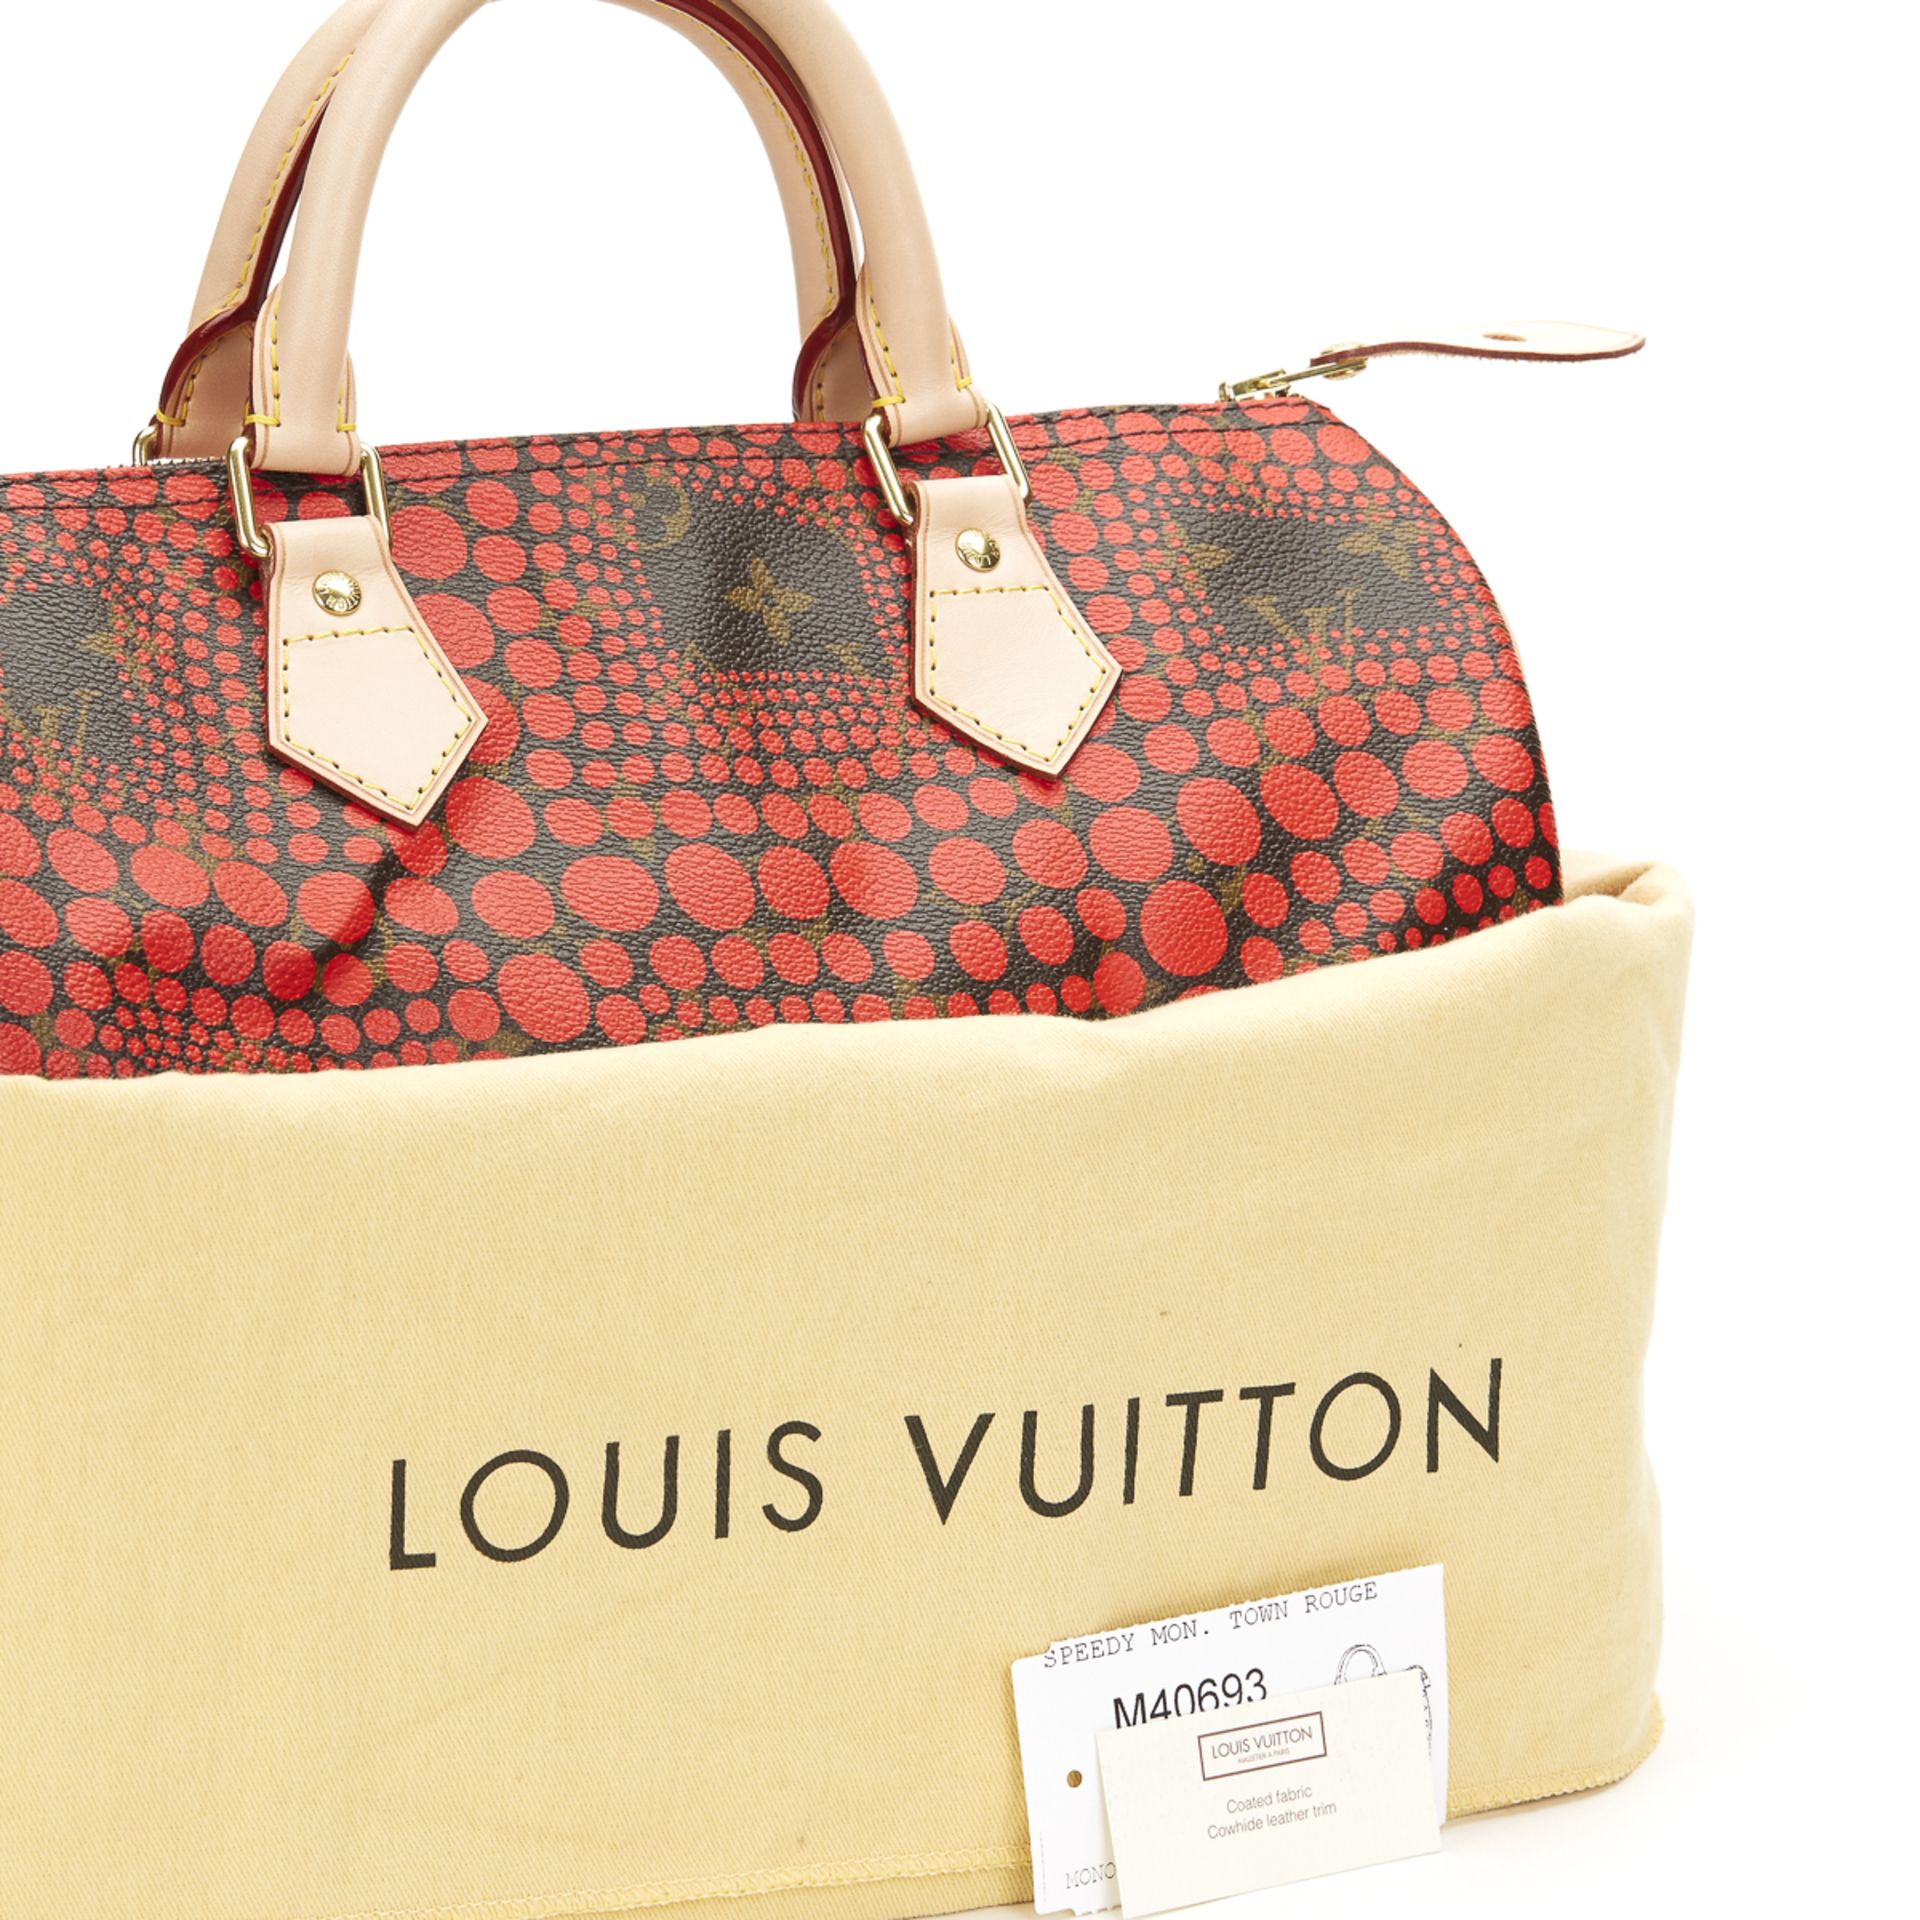 Louis Vuitton Speedy 30 - Image 4 of 20